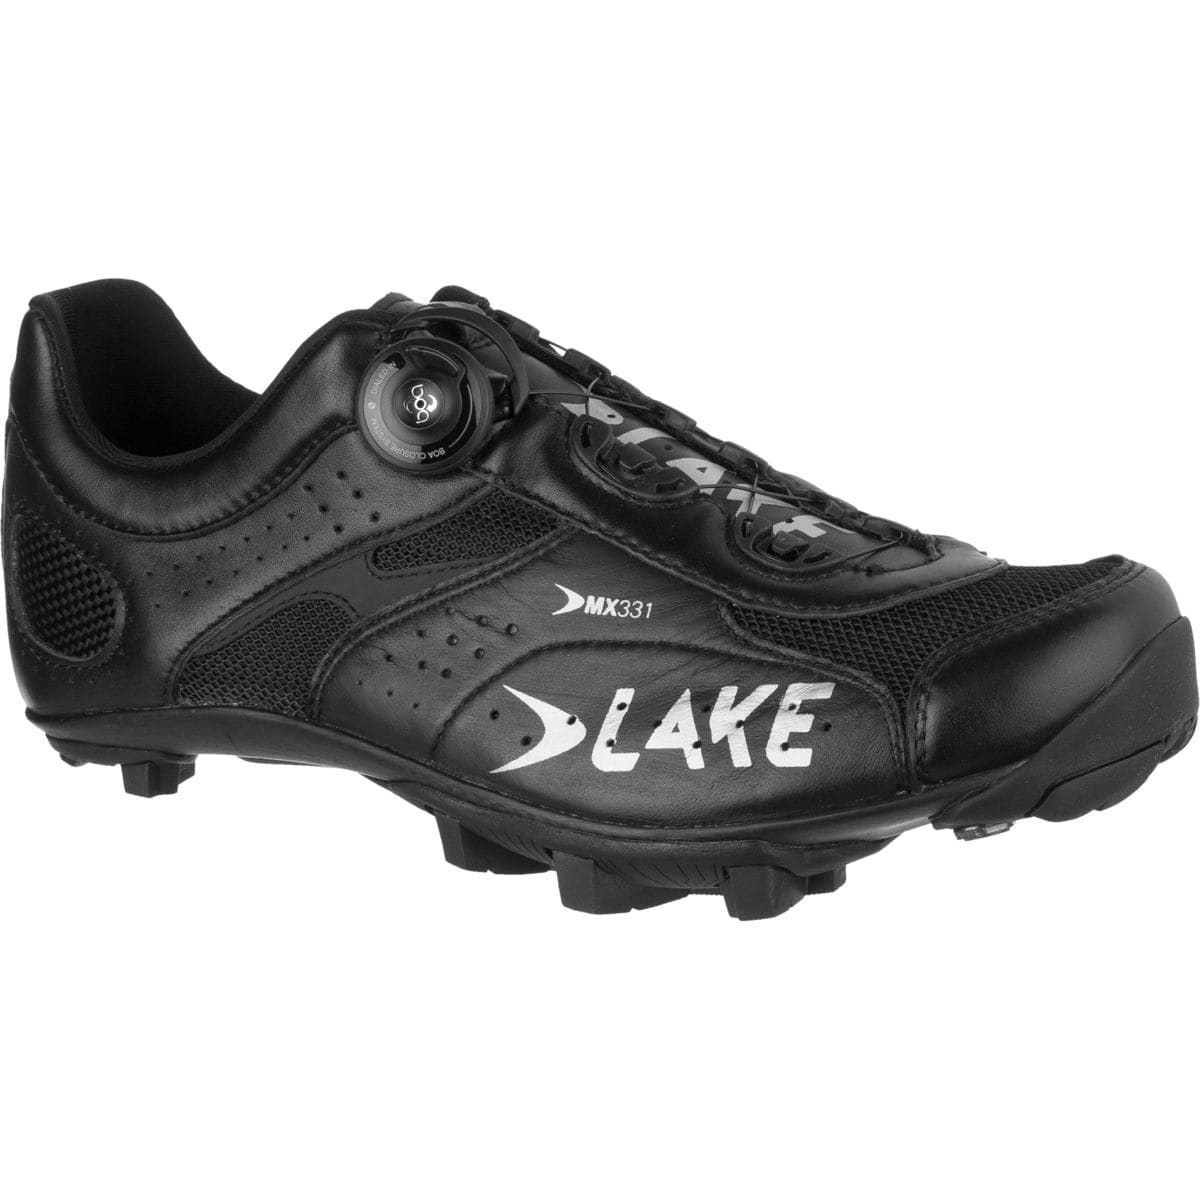 Lake MX331 Shoe Men's